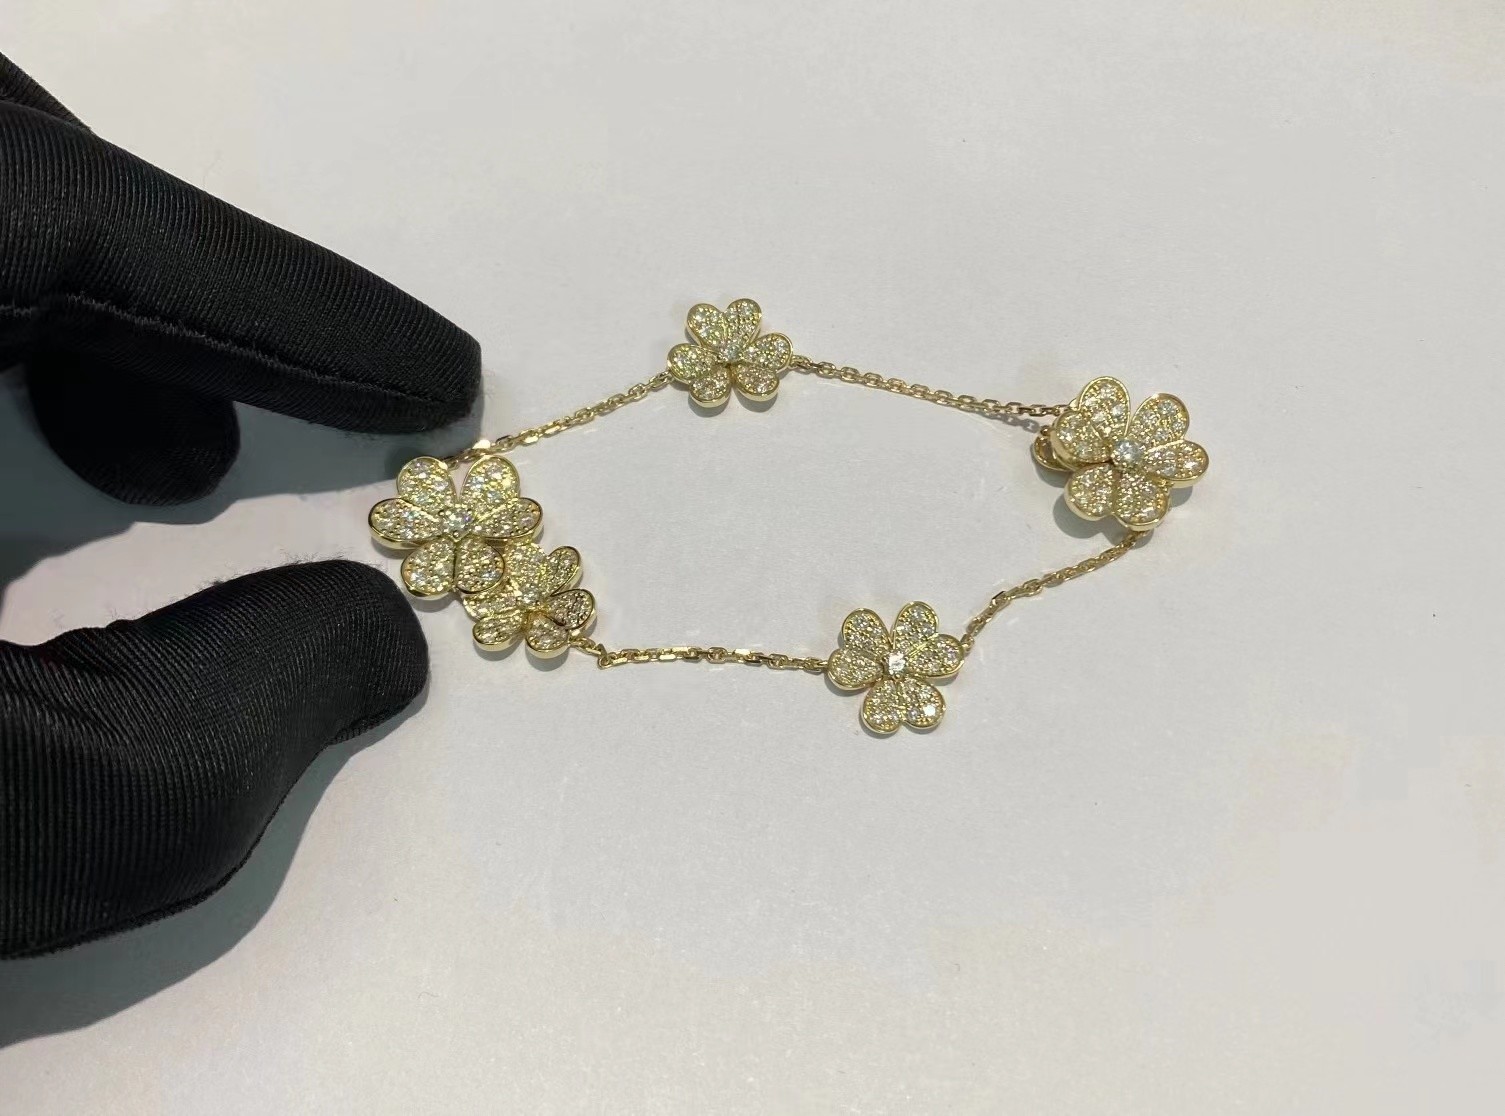  luxury gold jewelry Van Cleef &amp; Arpels Frivole Bracelet 5 Flowers 18K Gold Diamond jewelry suppliers Manufactures